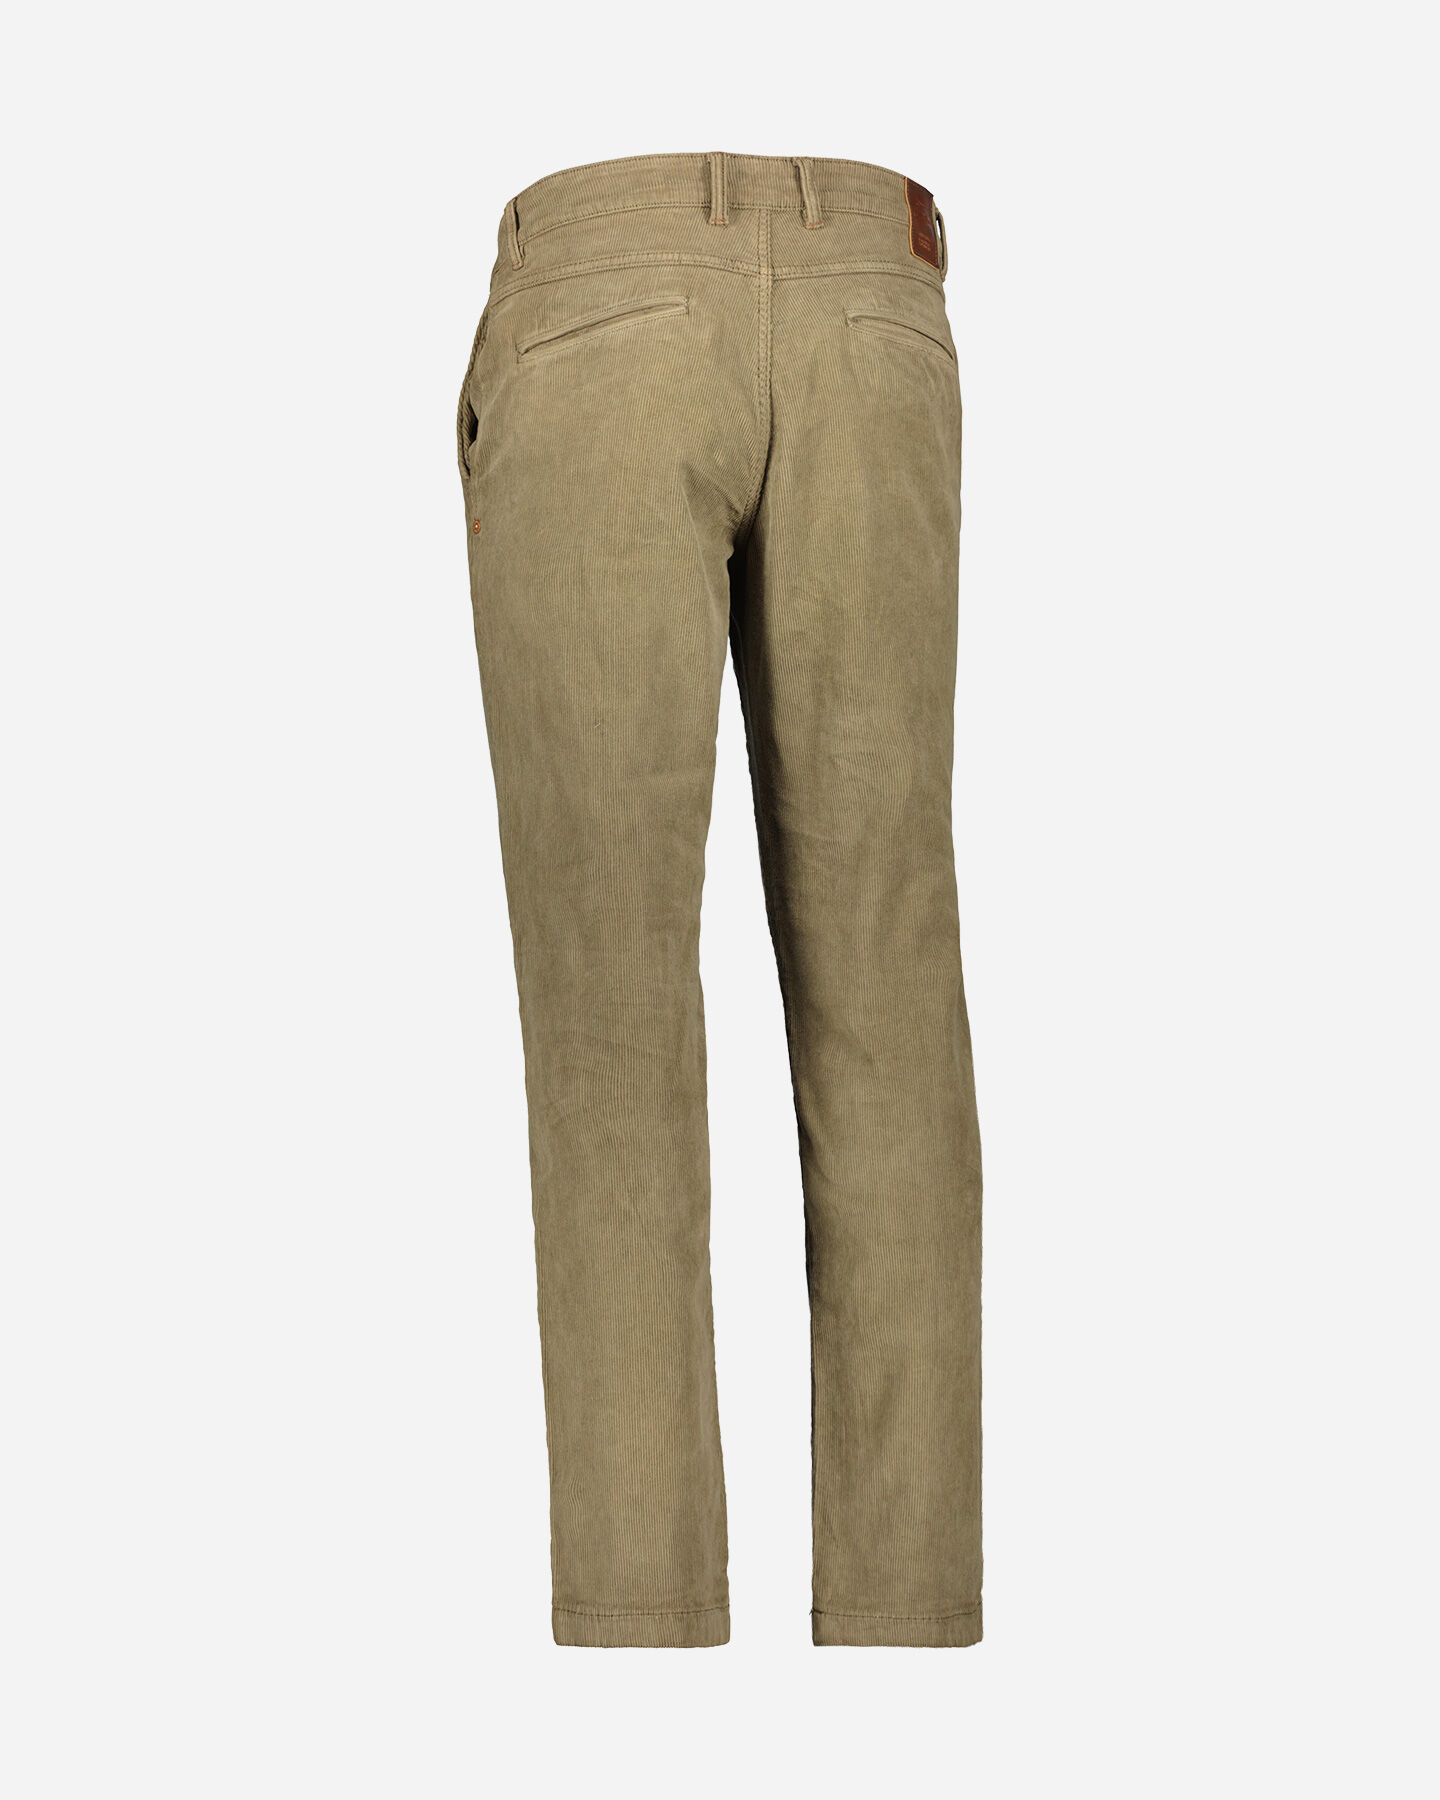  Pantalone COTTON BELT LEON J. M S4113480|165|34 scatto 2